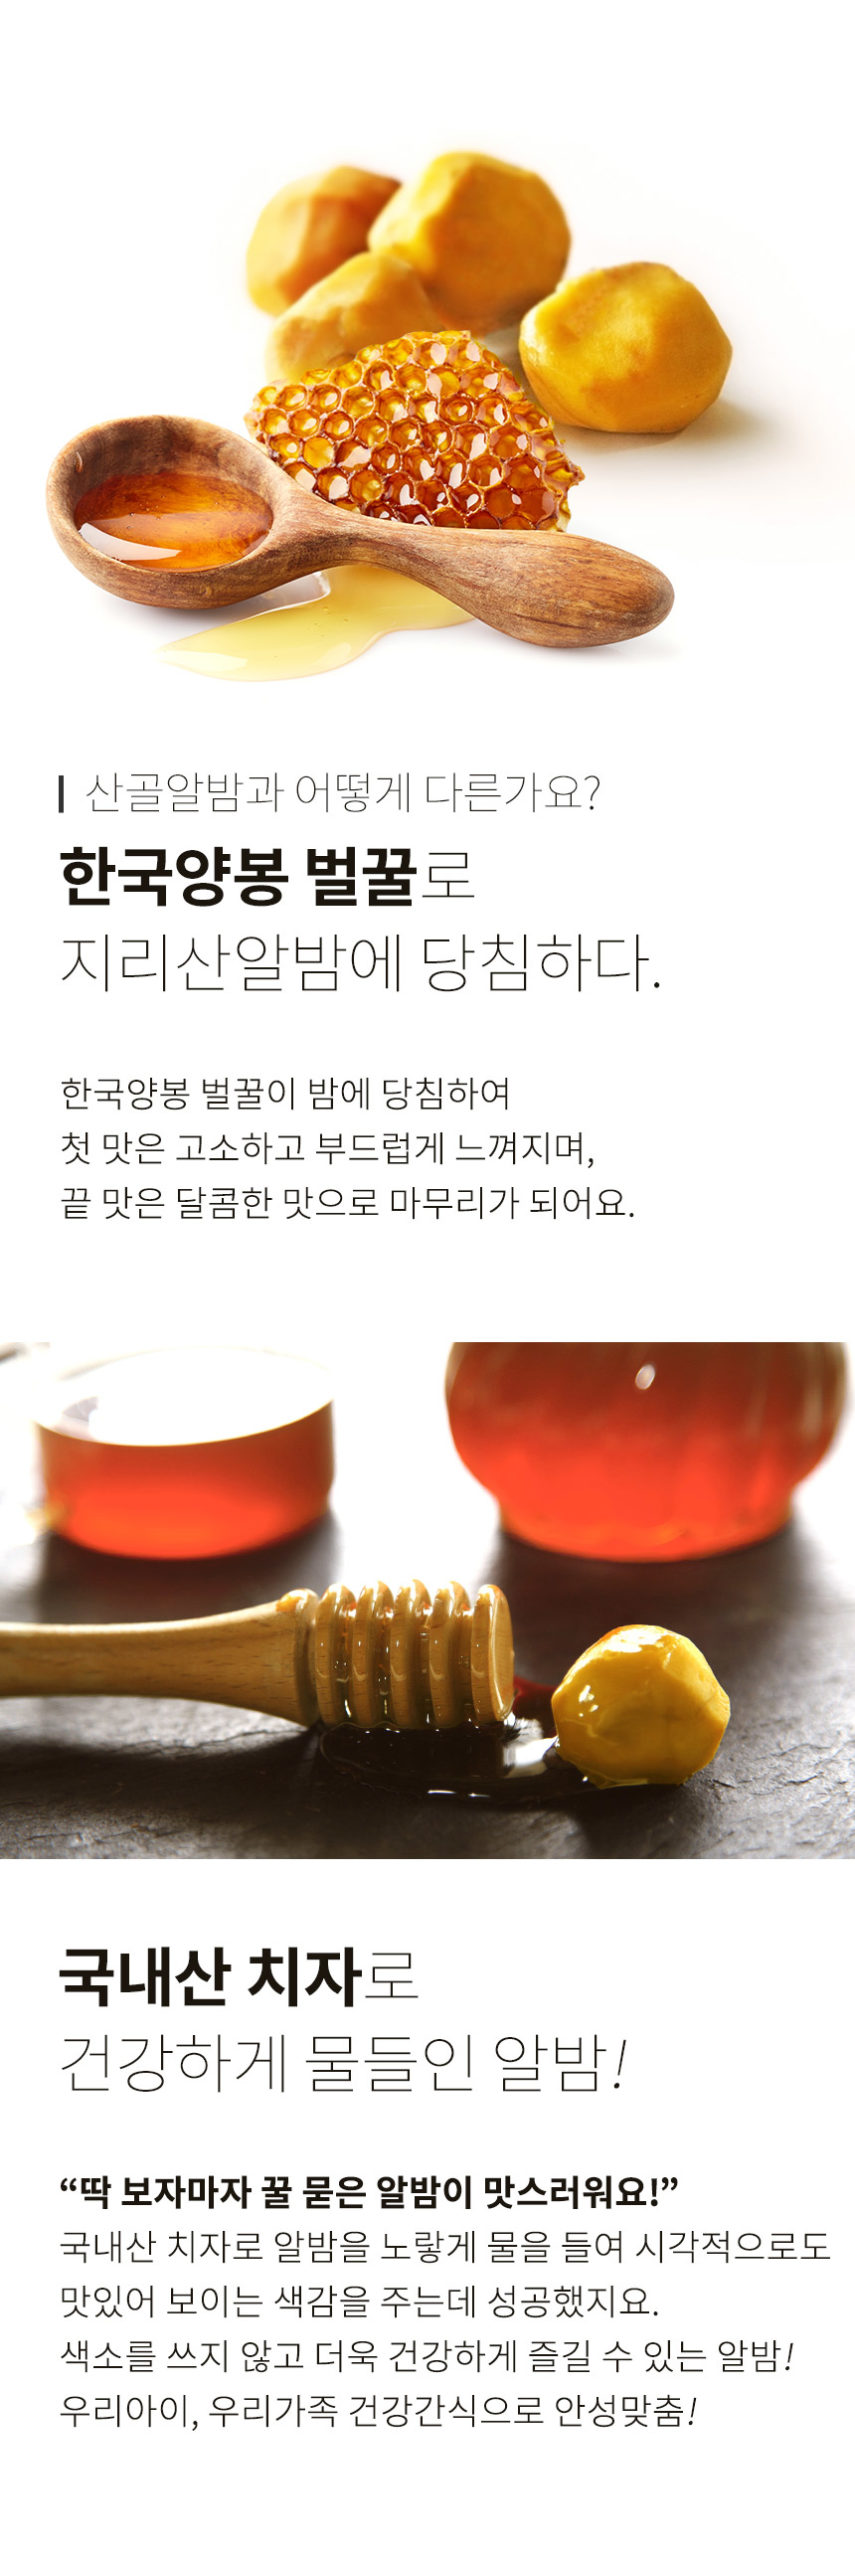 韓國食品-[Ecomommeal] Sangol 蜜糖栗子 50g